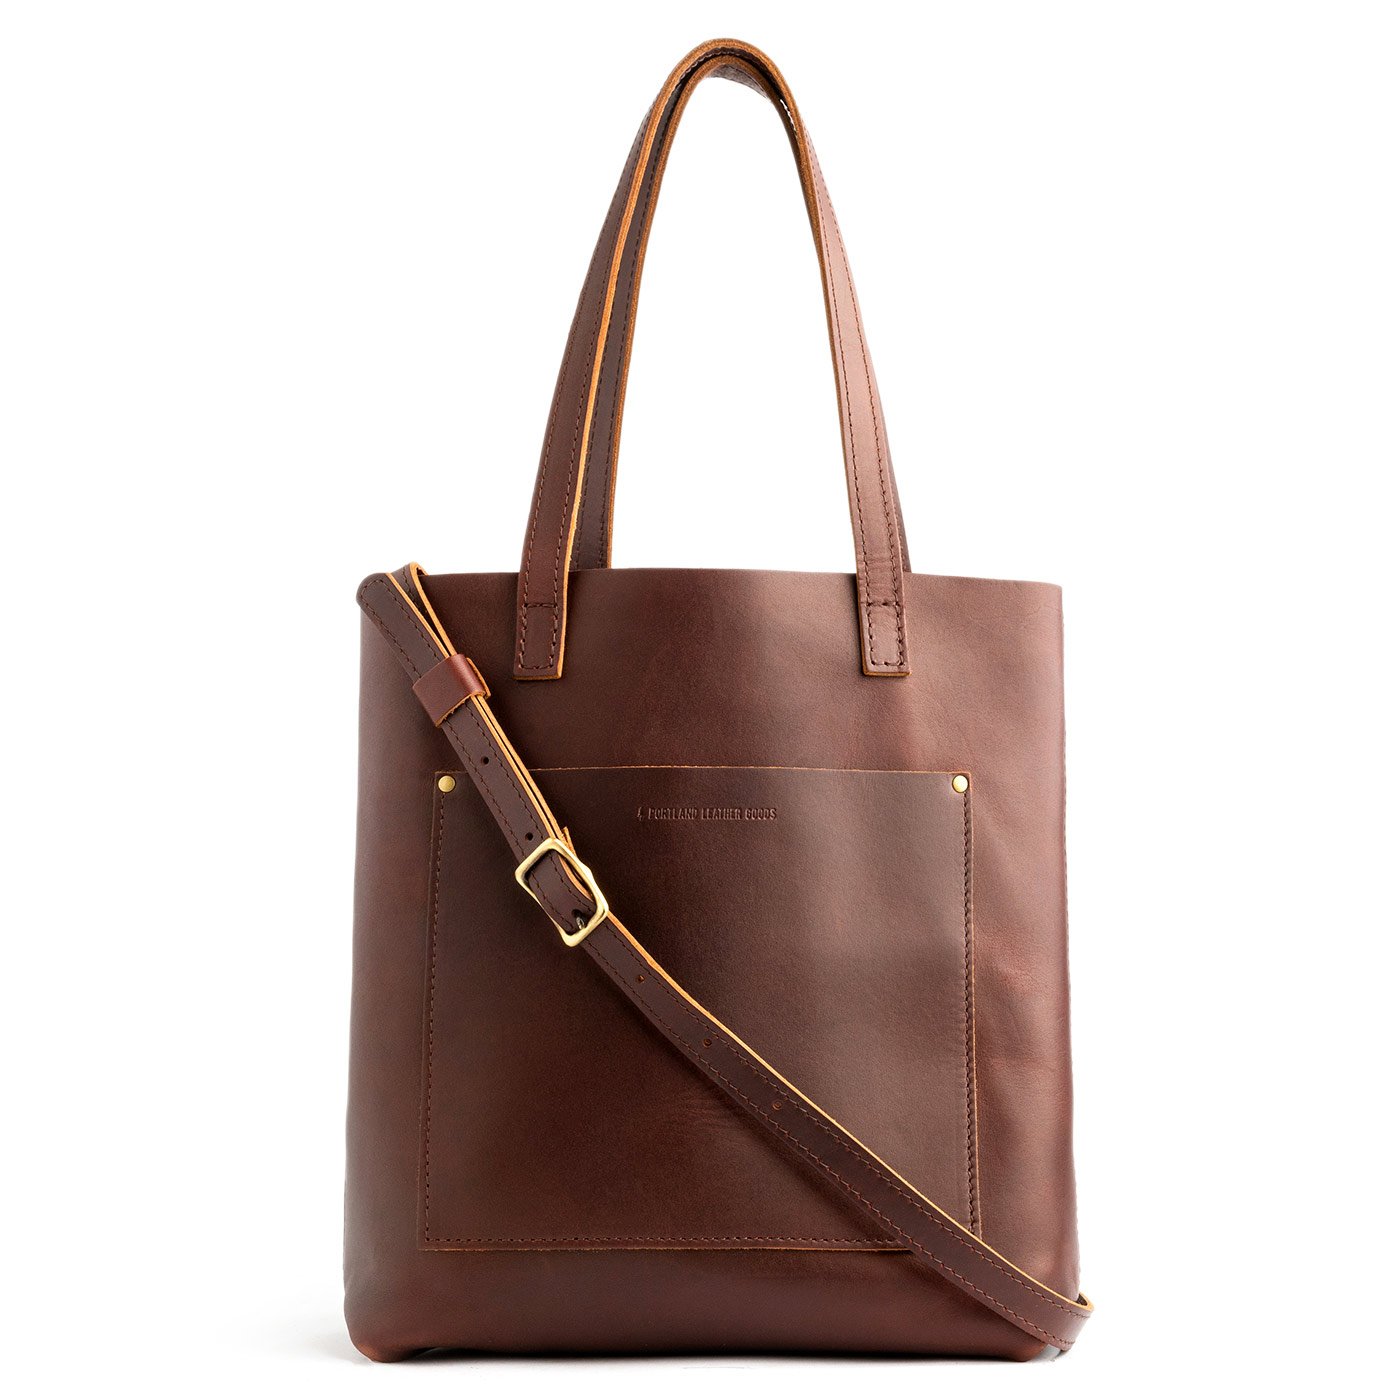 All Color: Cognac | handmade leather crossbody tote bag